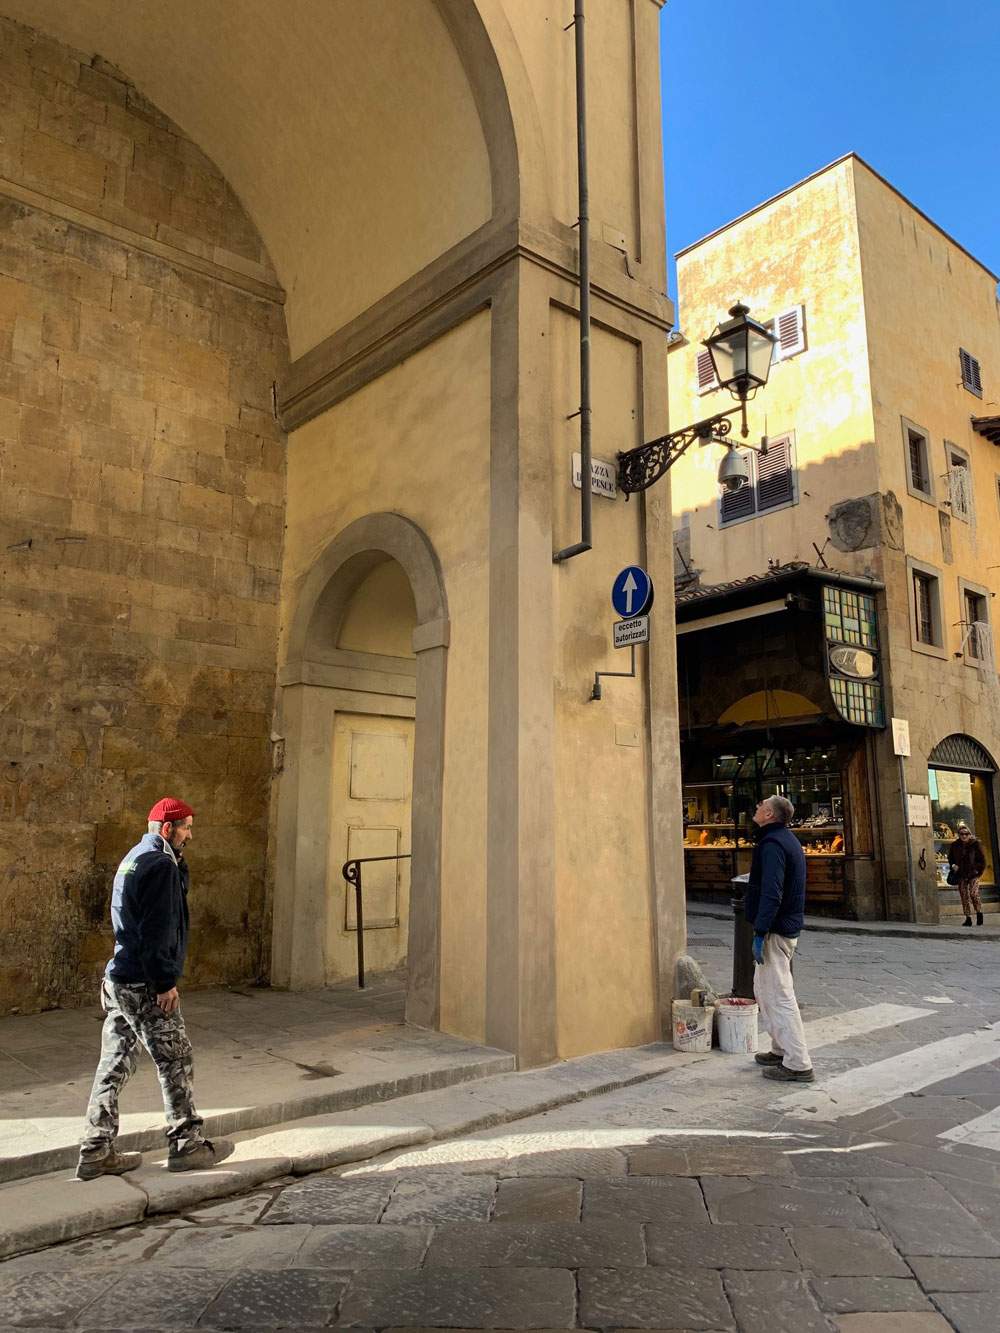 Florence: restored Vasari Corridor pillar damaged by hit-and-run truck